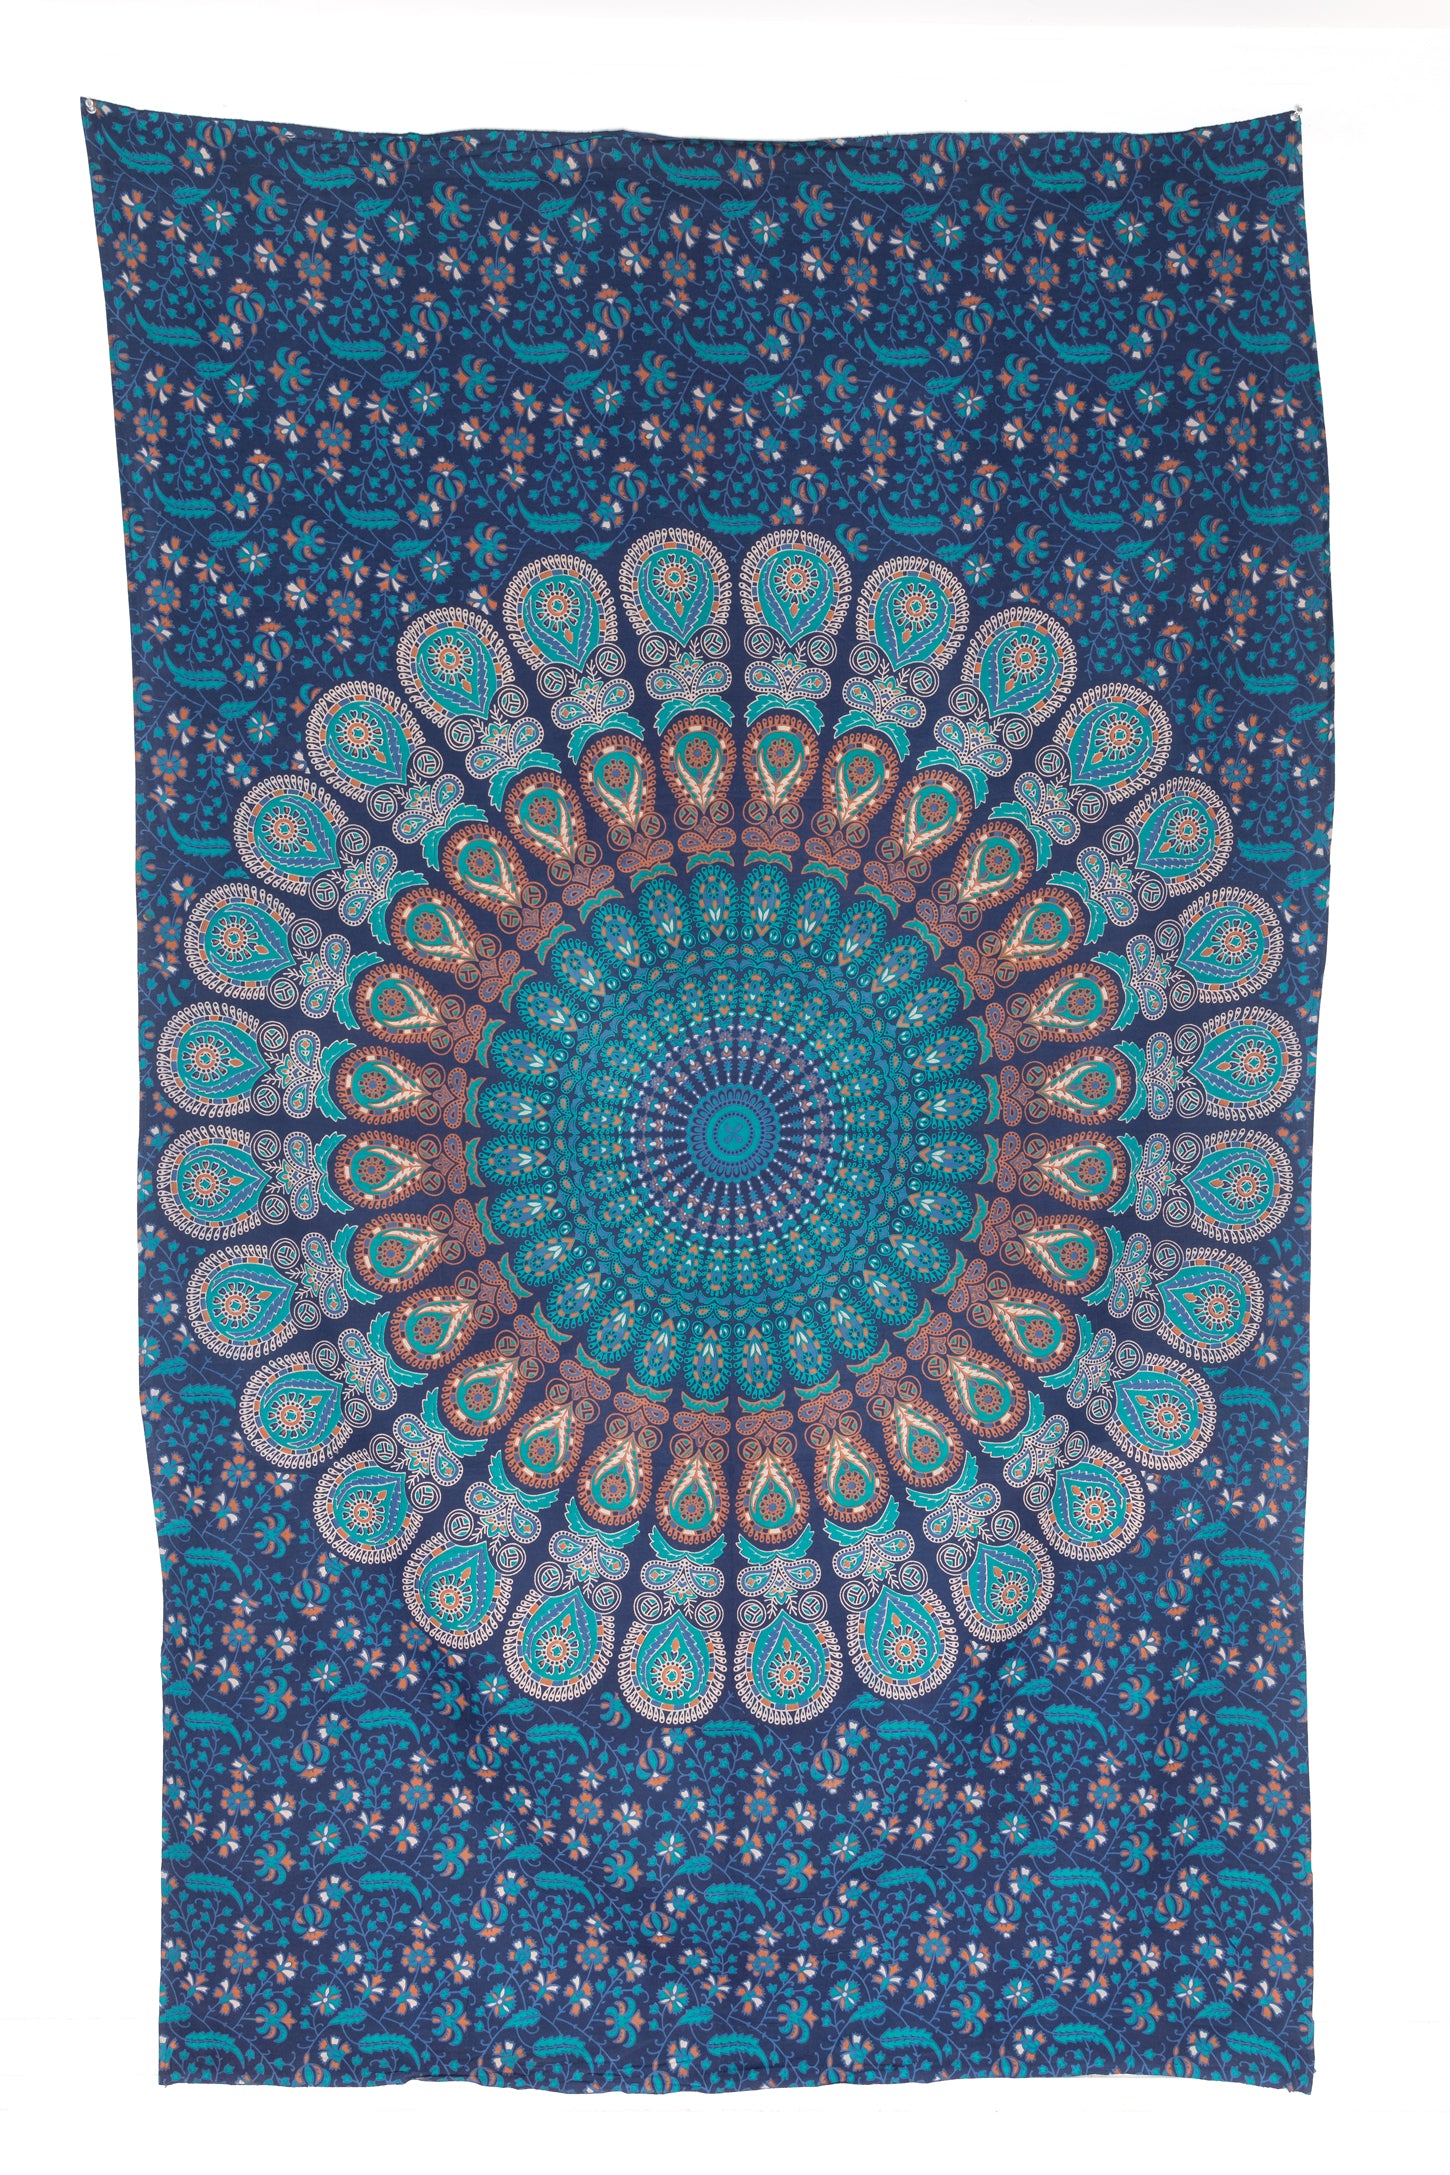 Peacock Mandala Tapestry